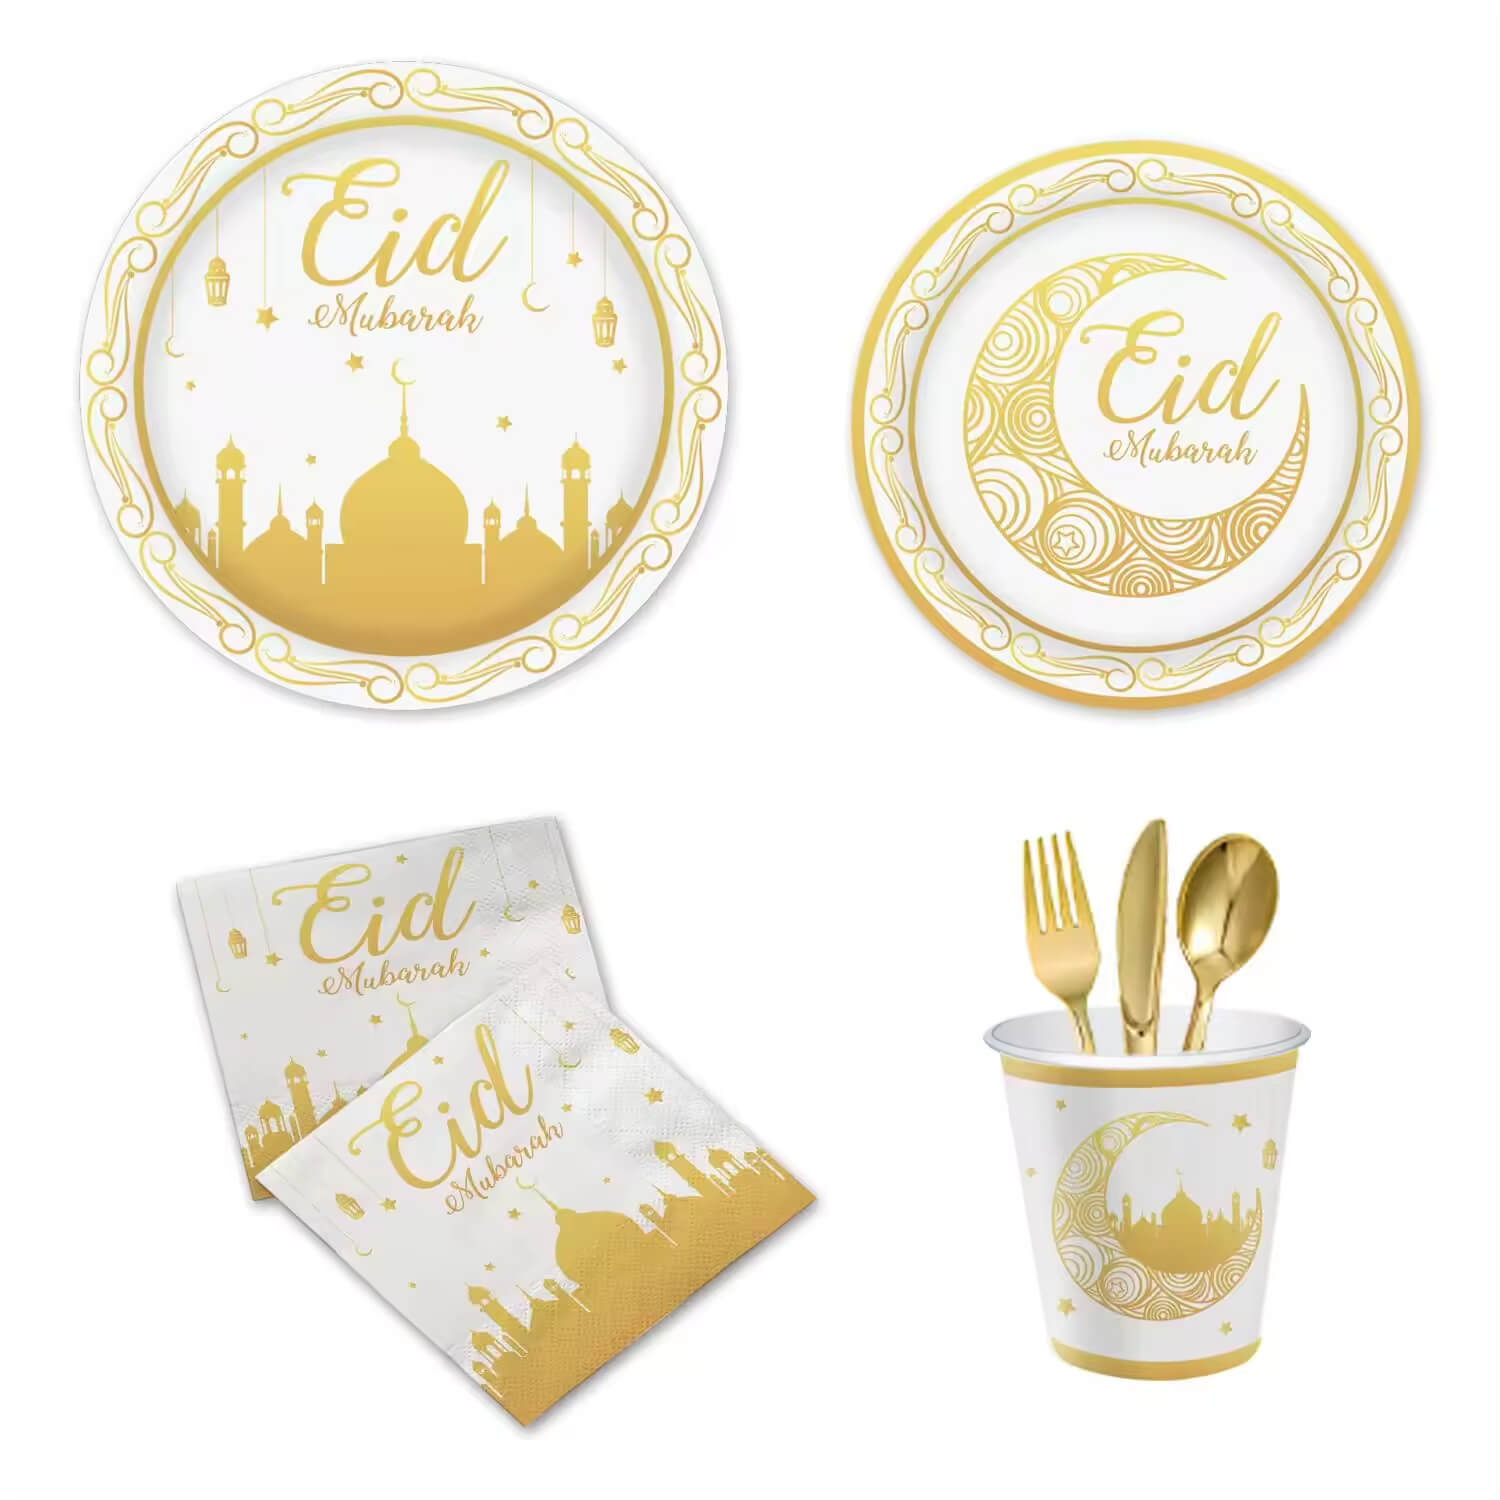 Eid Mubarak Party Tableware Sets